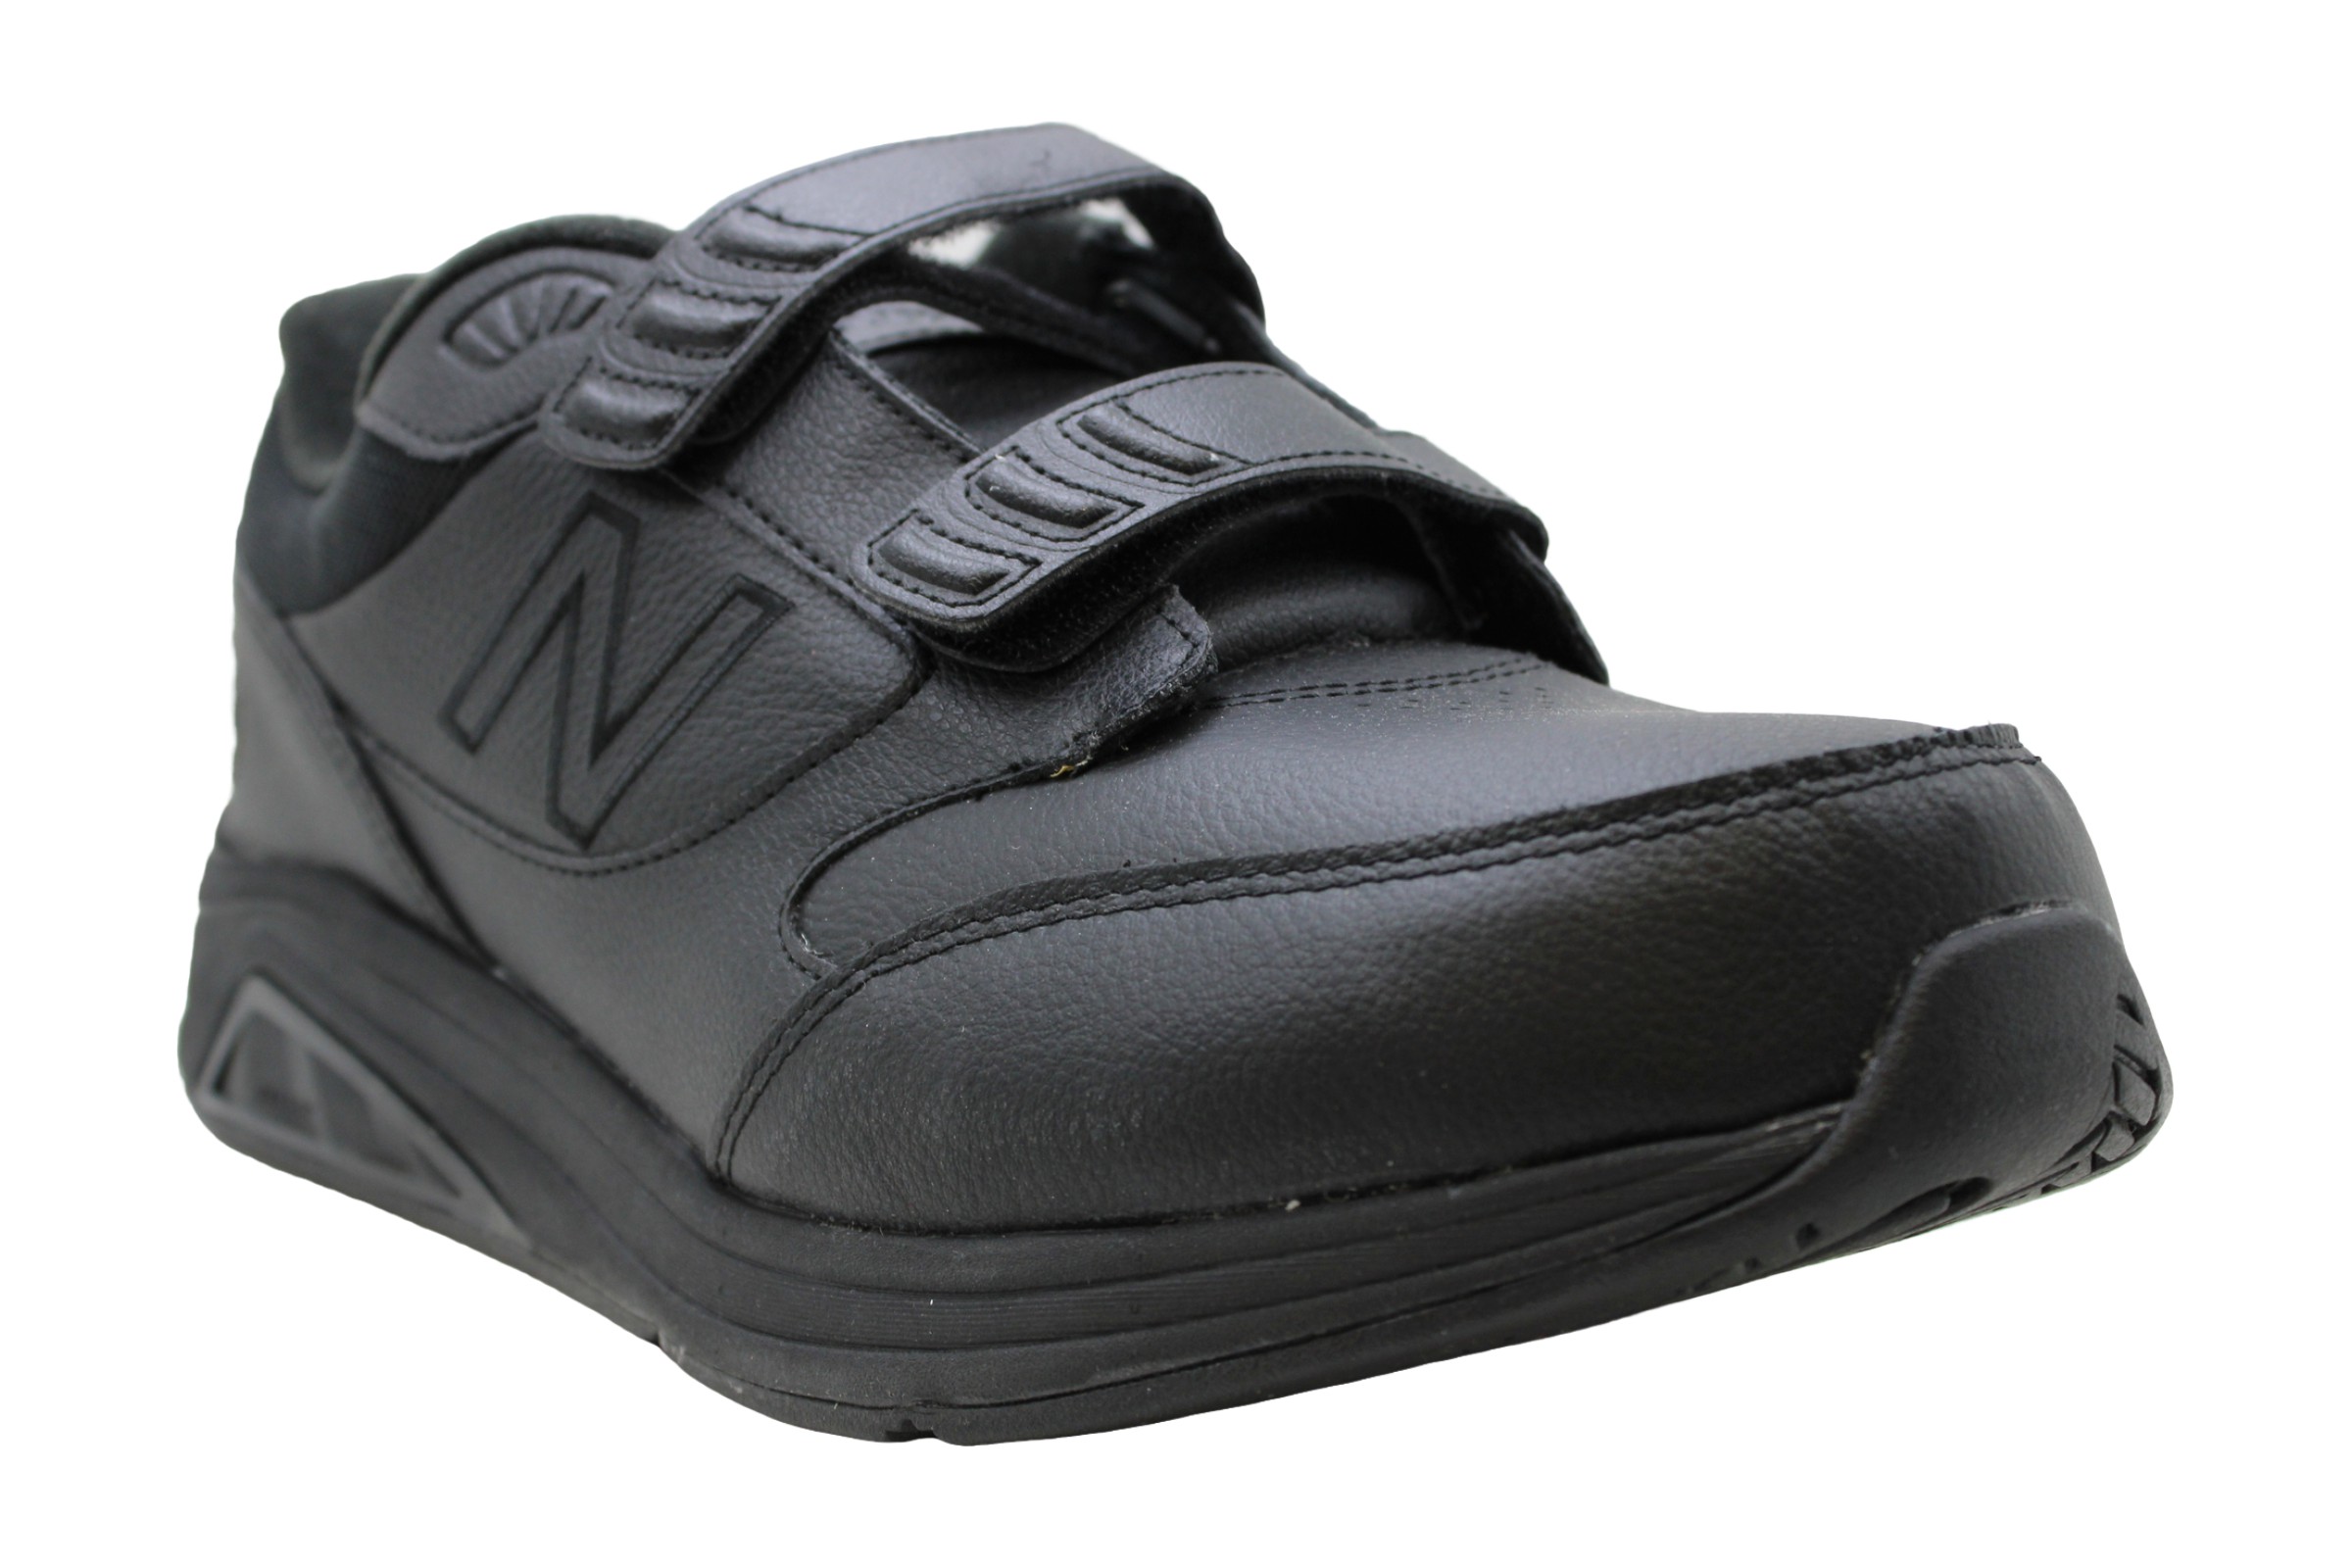 New Balance Mens MW928 Low Top Walking Shoes BlackBlack Size 110